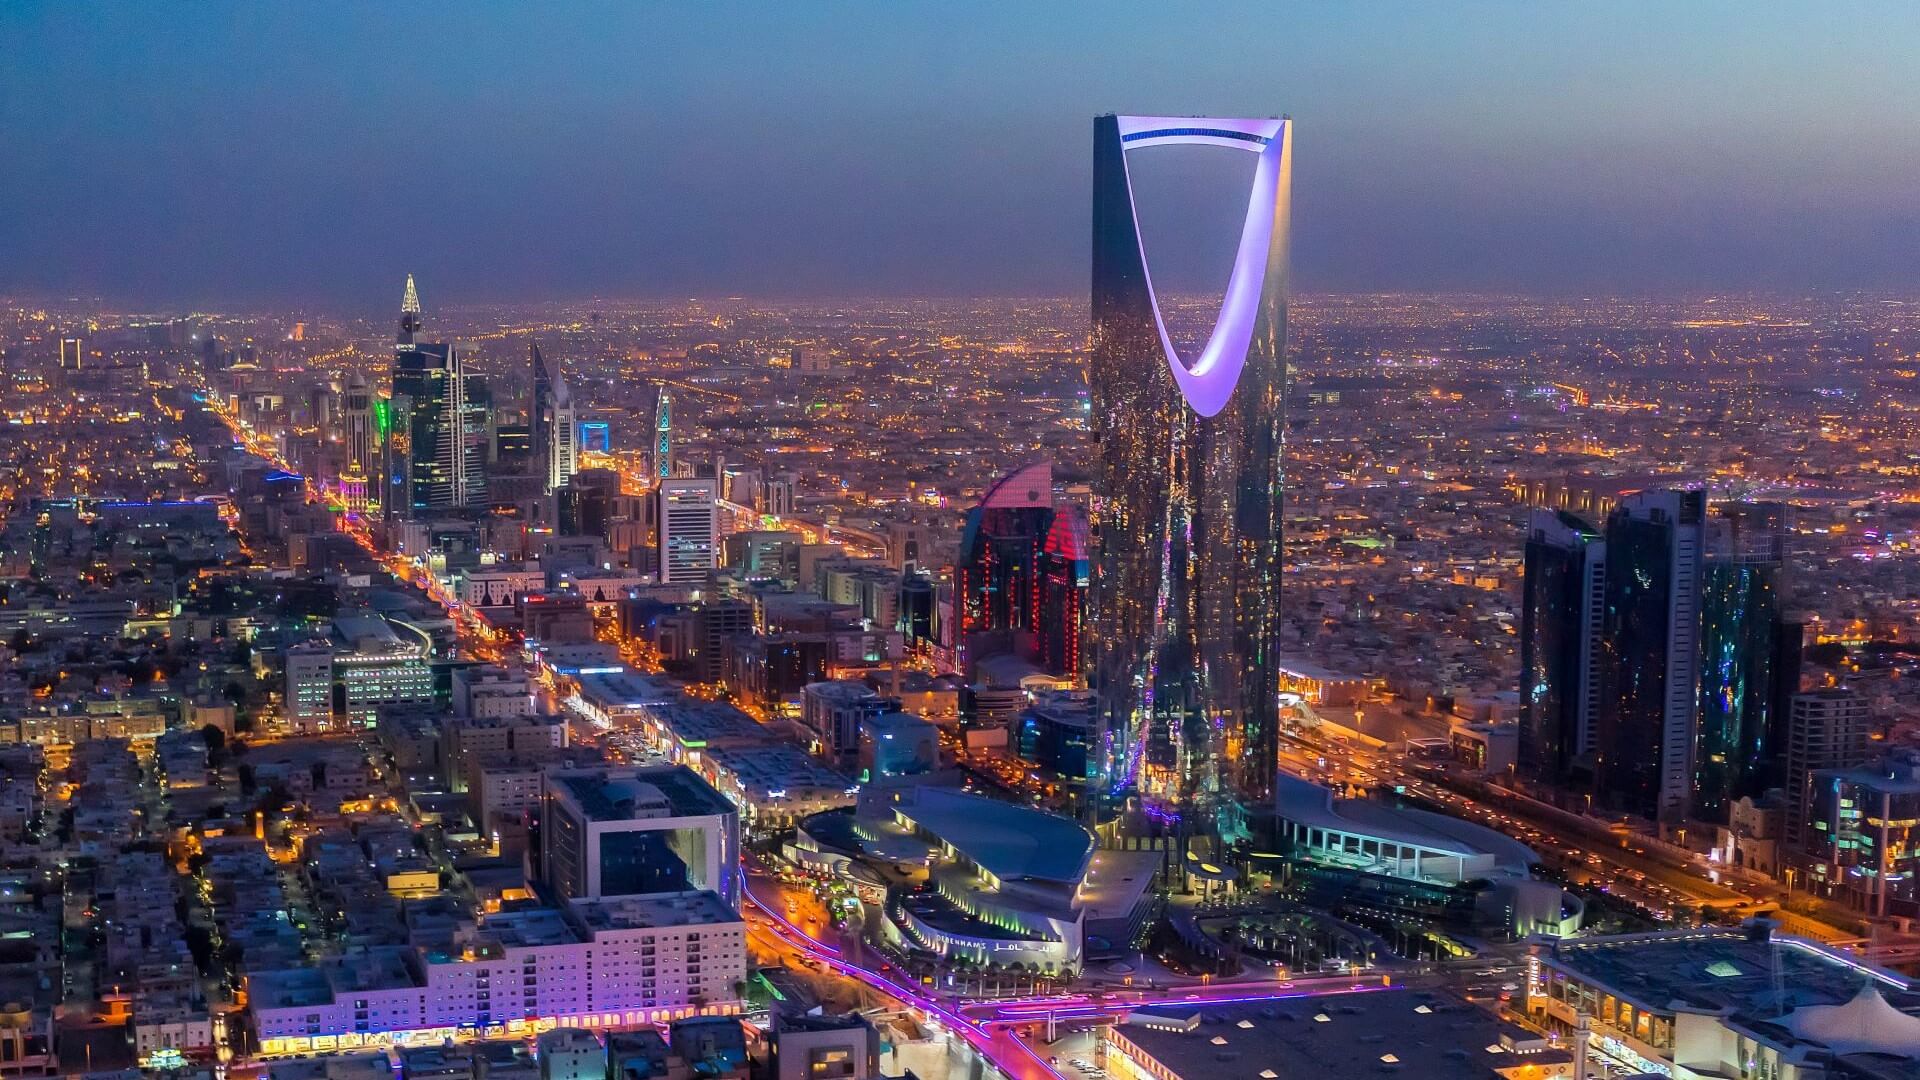 Nighttime view over Riyadh, Saudi Arabia